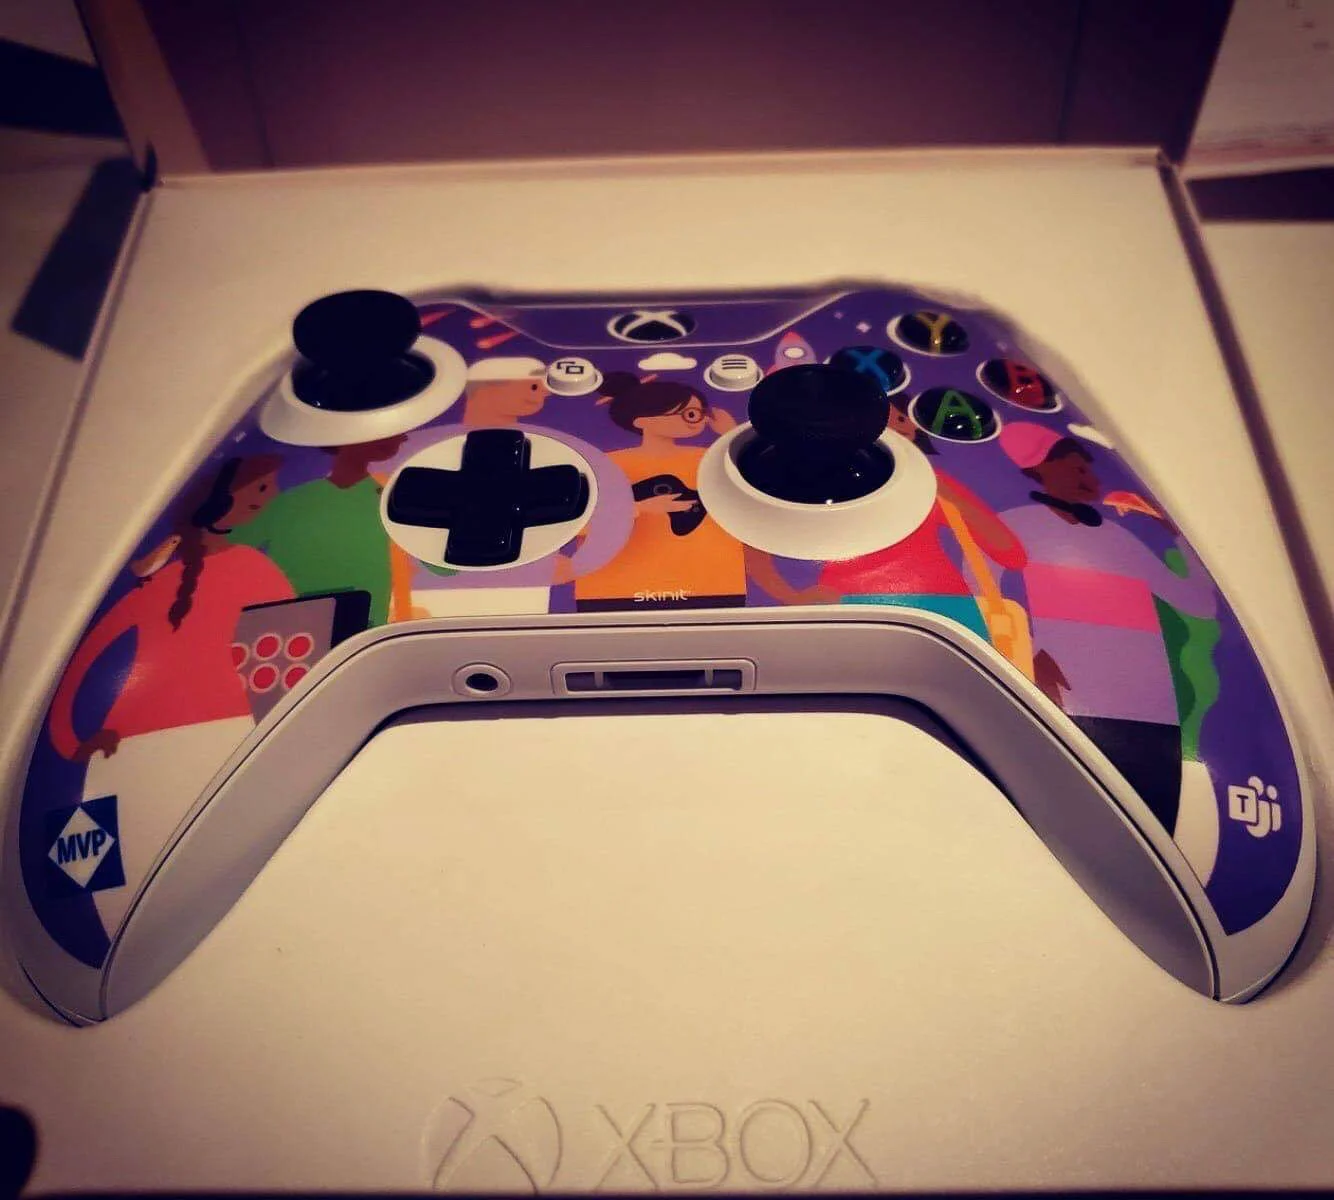  Microsoft Xbox One S Teams MVP controller